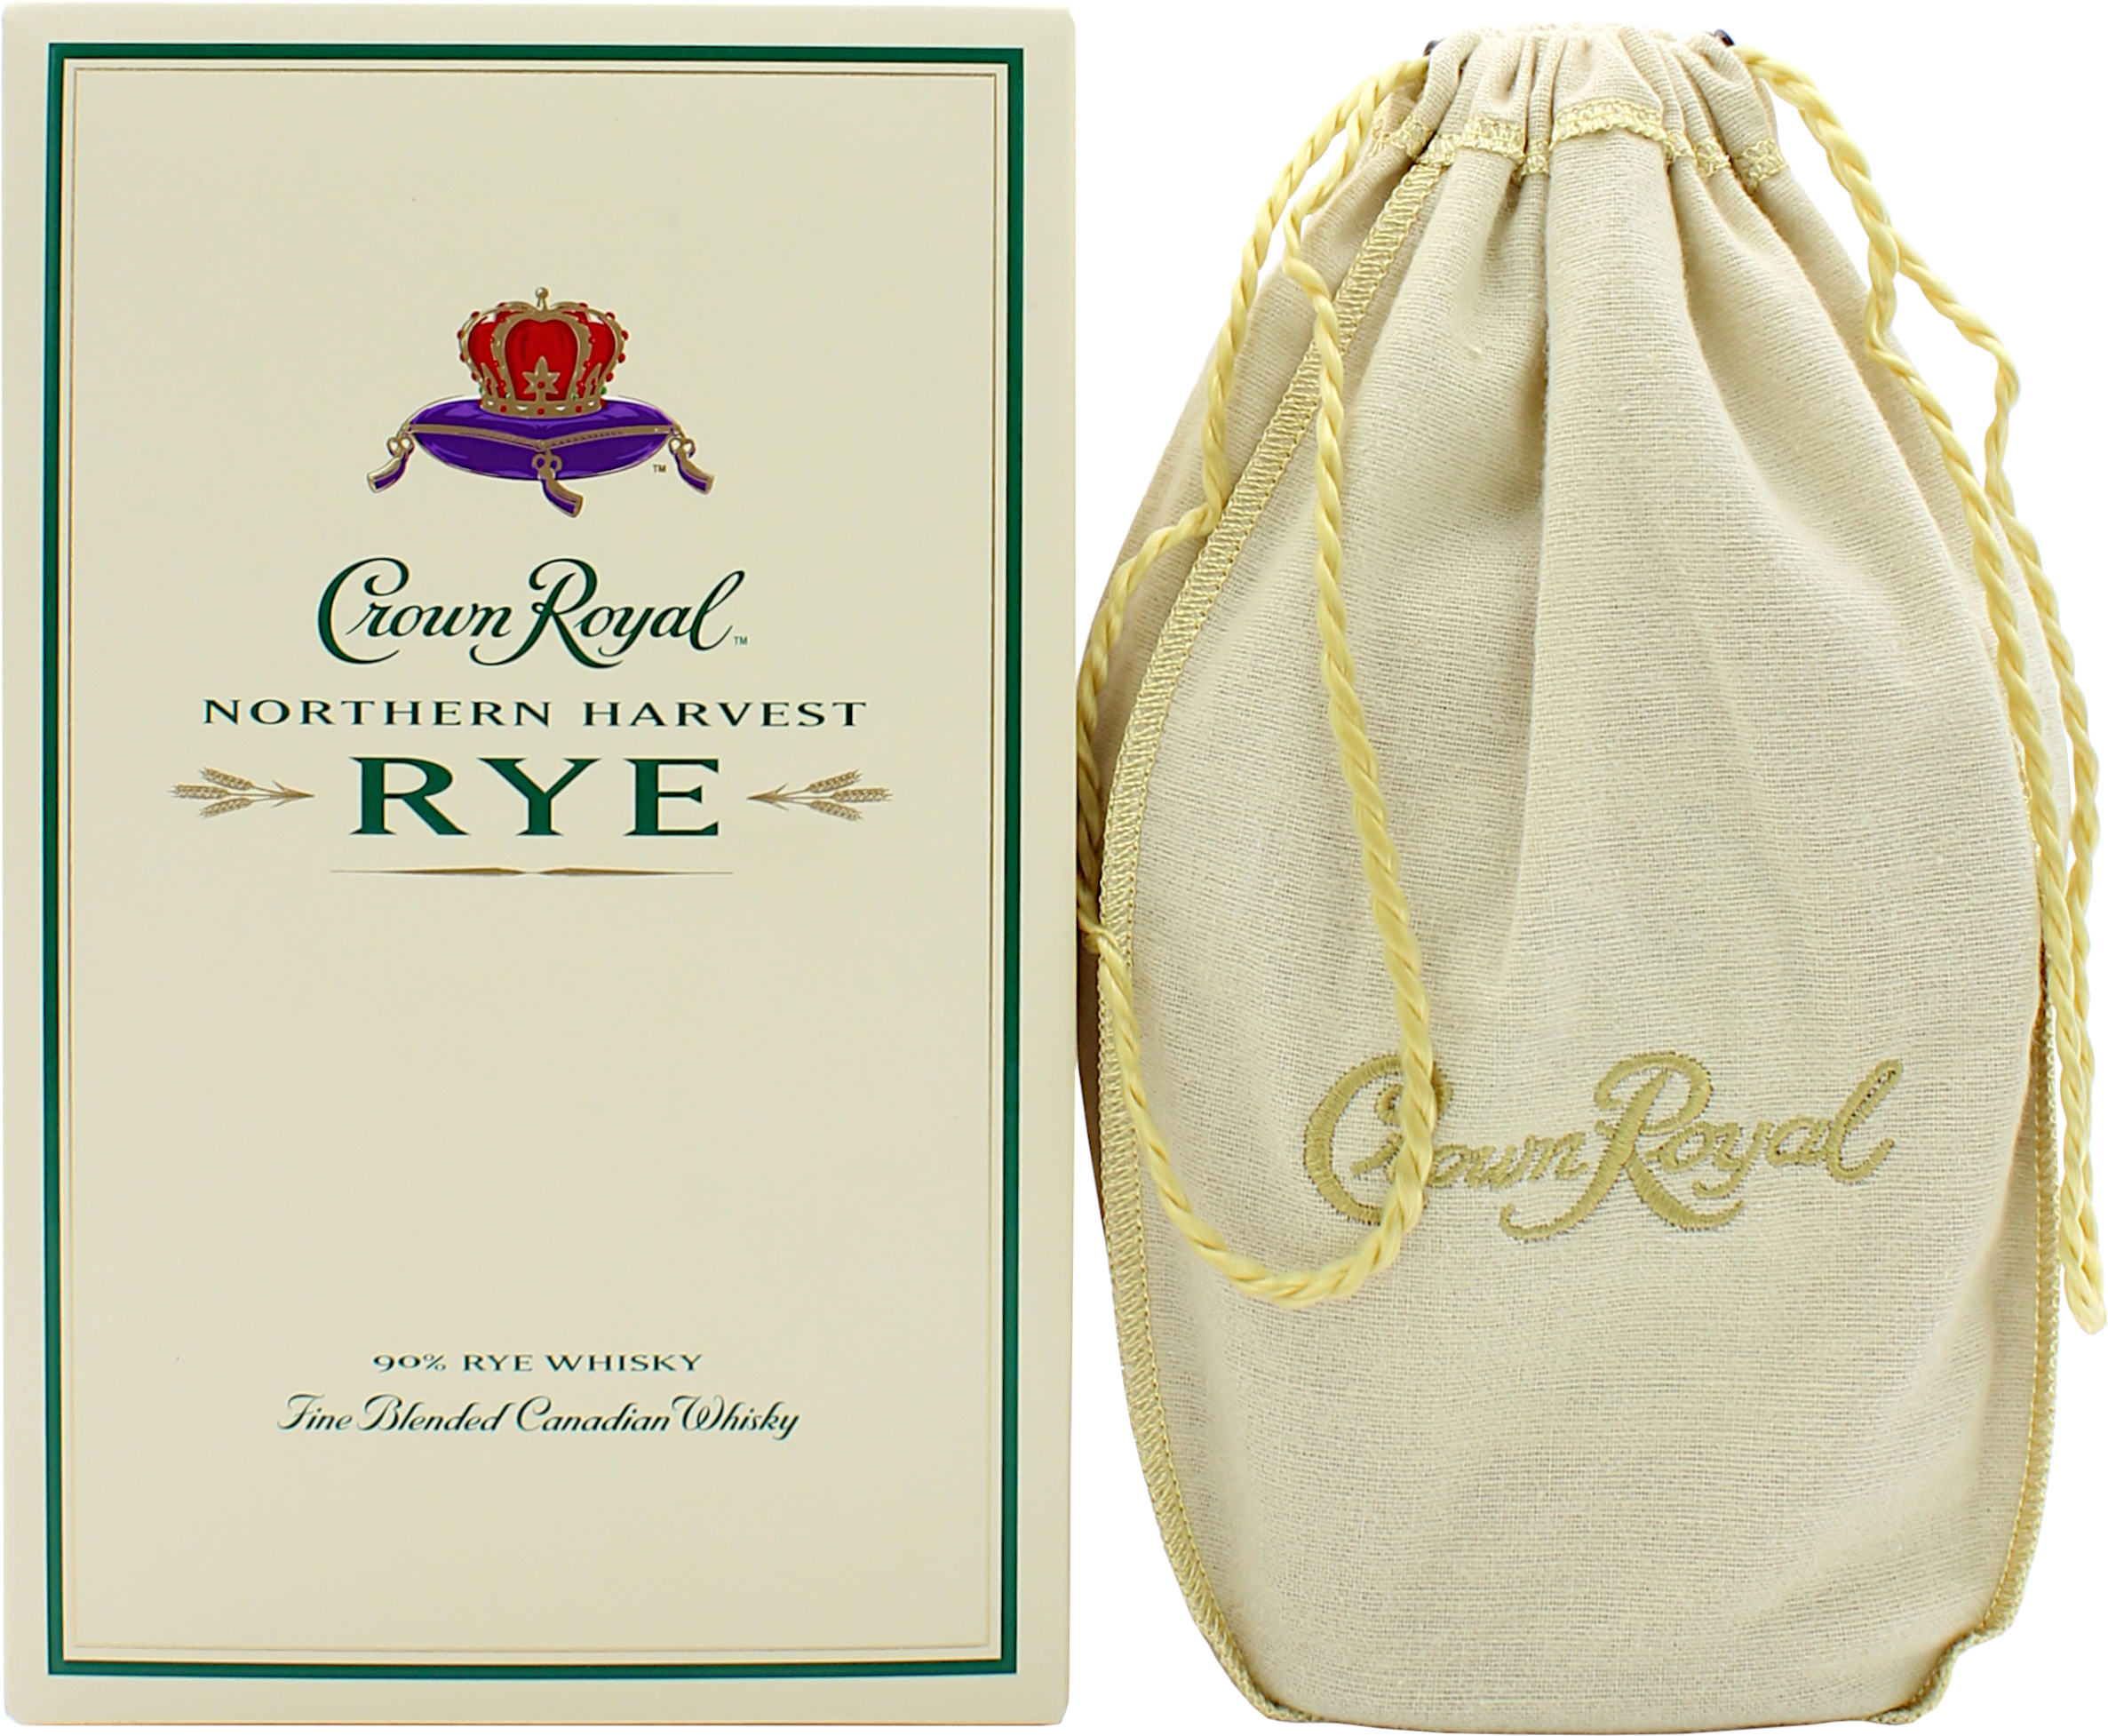 Crown Royal Northern Harvest Rye 45.0% 1 Liter